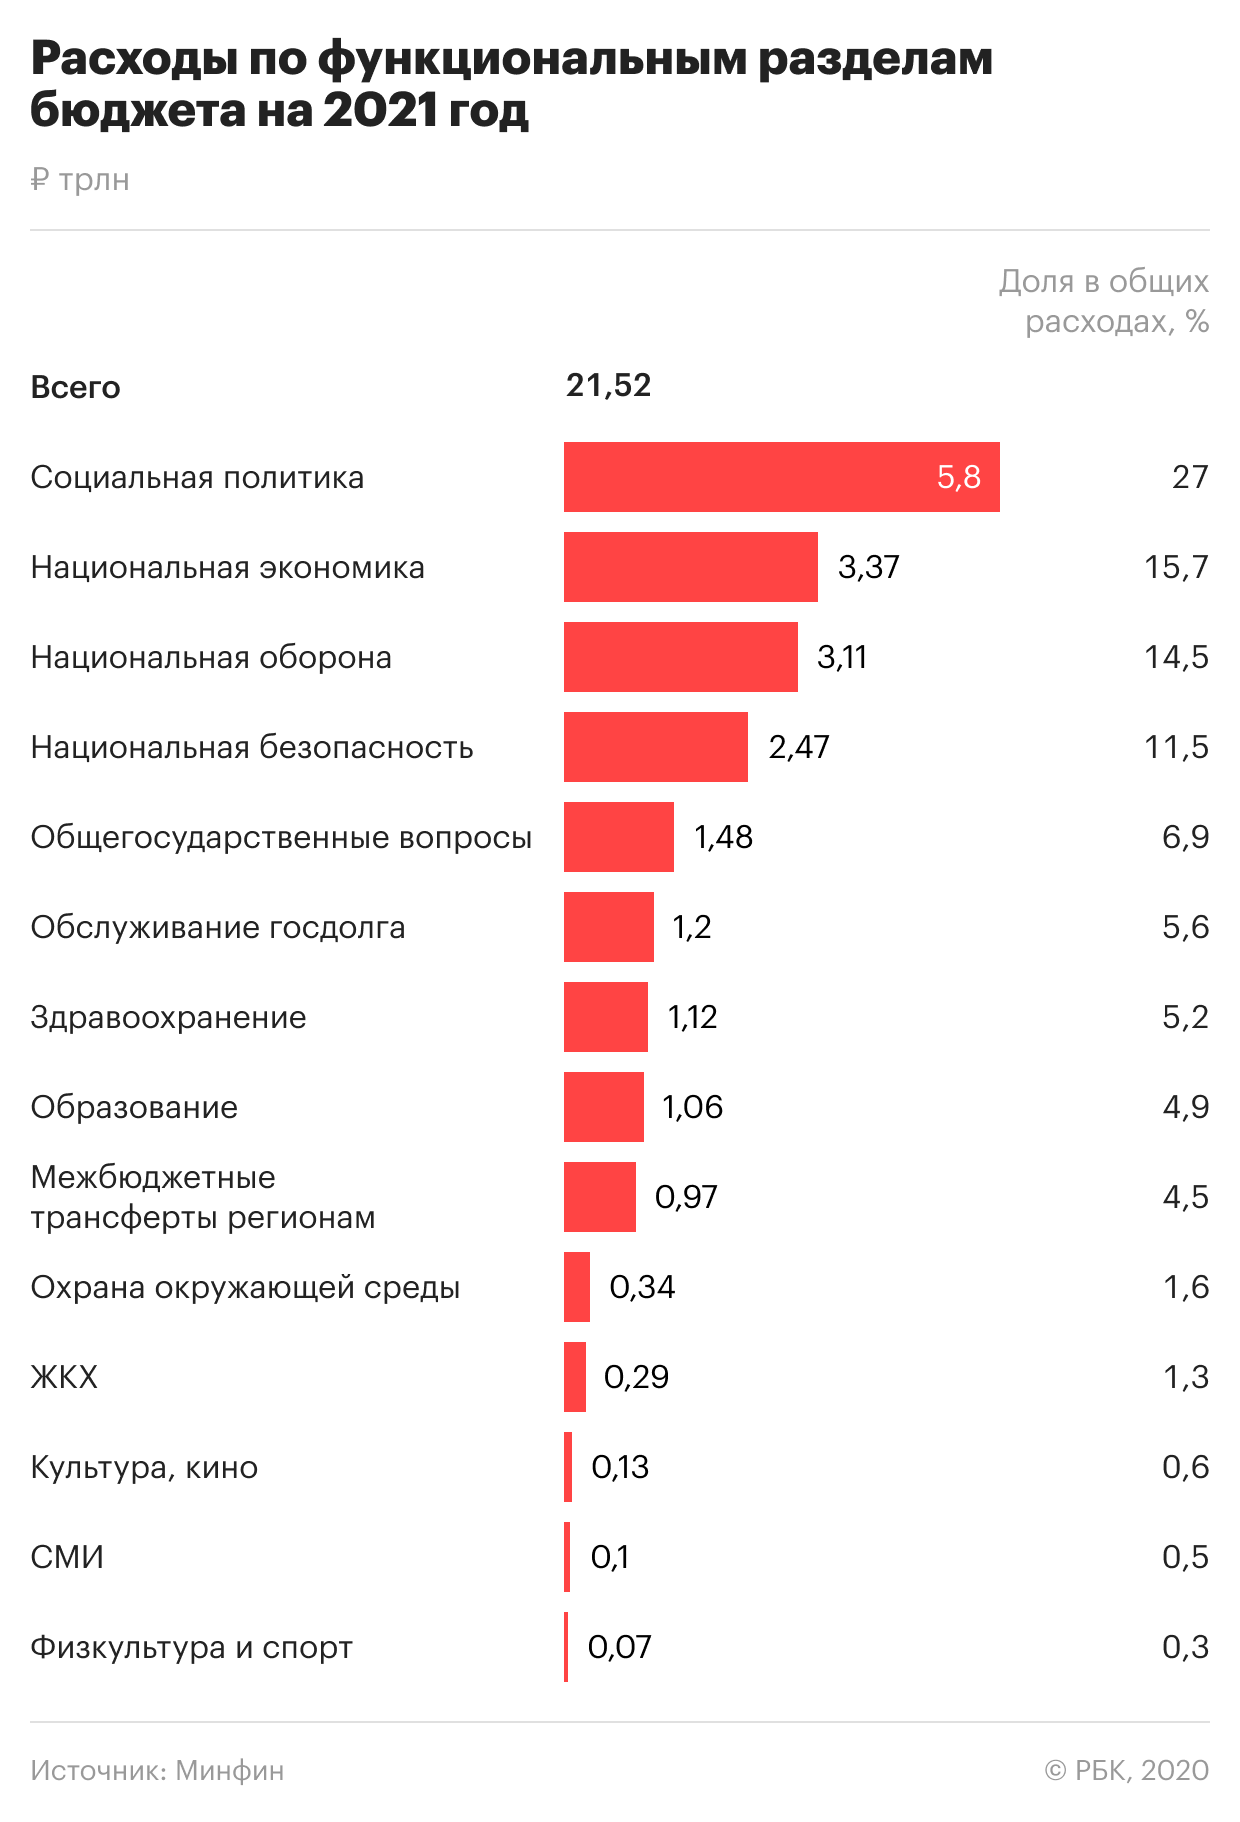 Структура бюджета РФ 2021 год. Расходы бюджета РФ на 2021 год. Структура госбюджета России 2021. Структура расходов федерального бюджета на 2021.